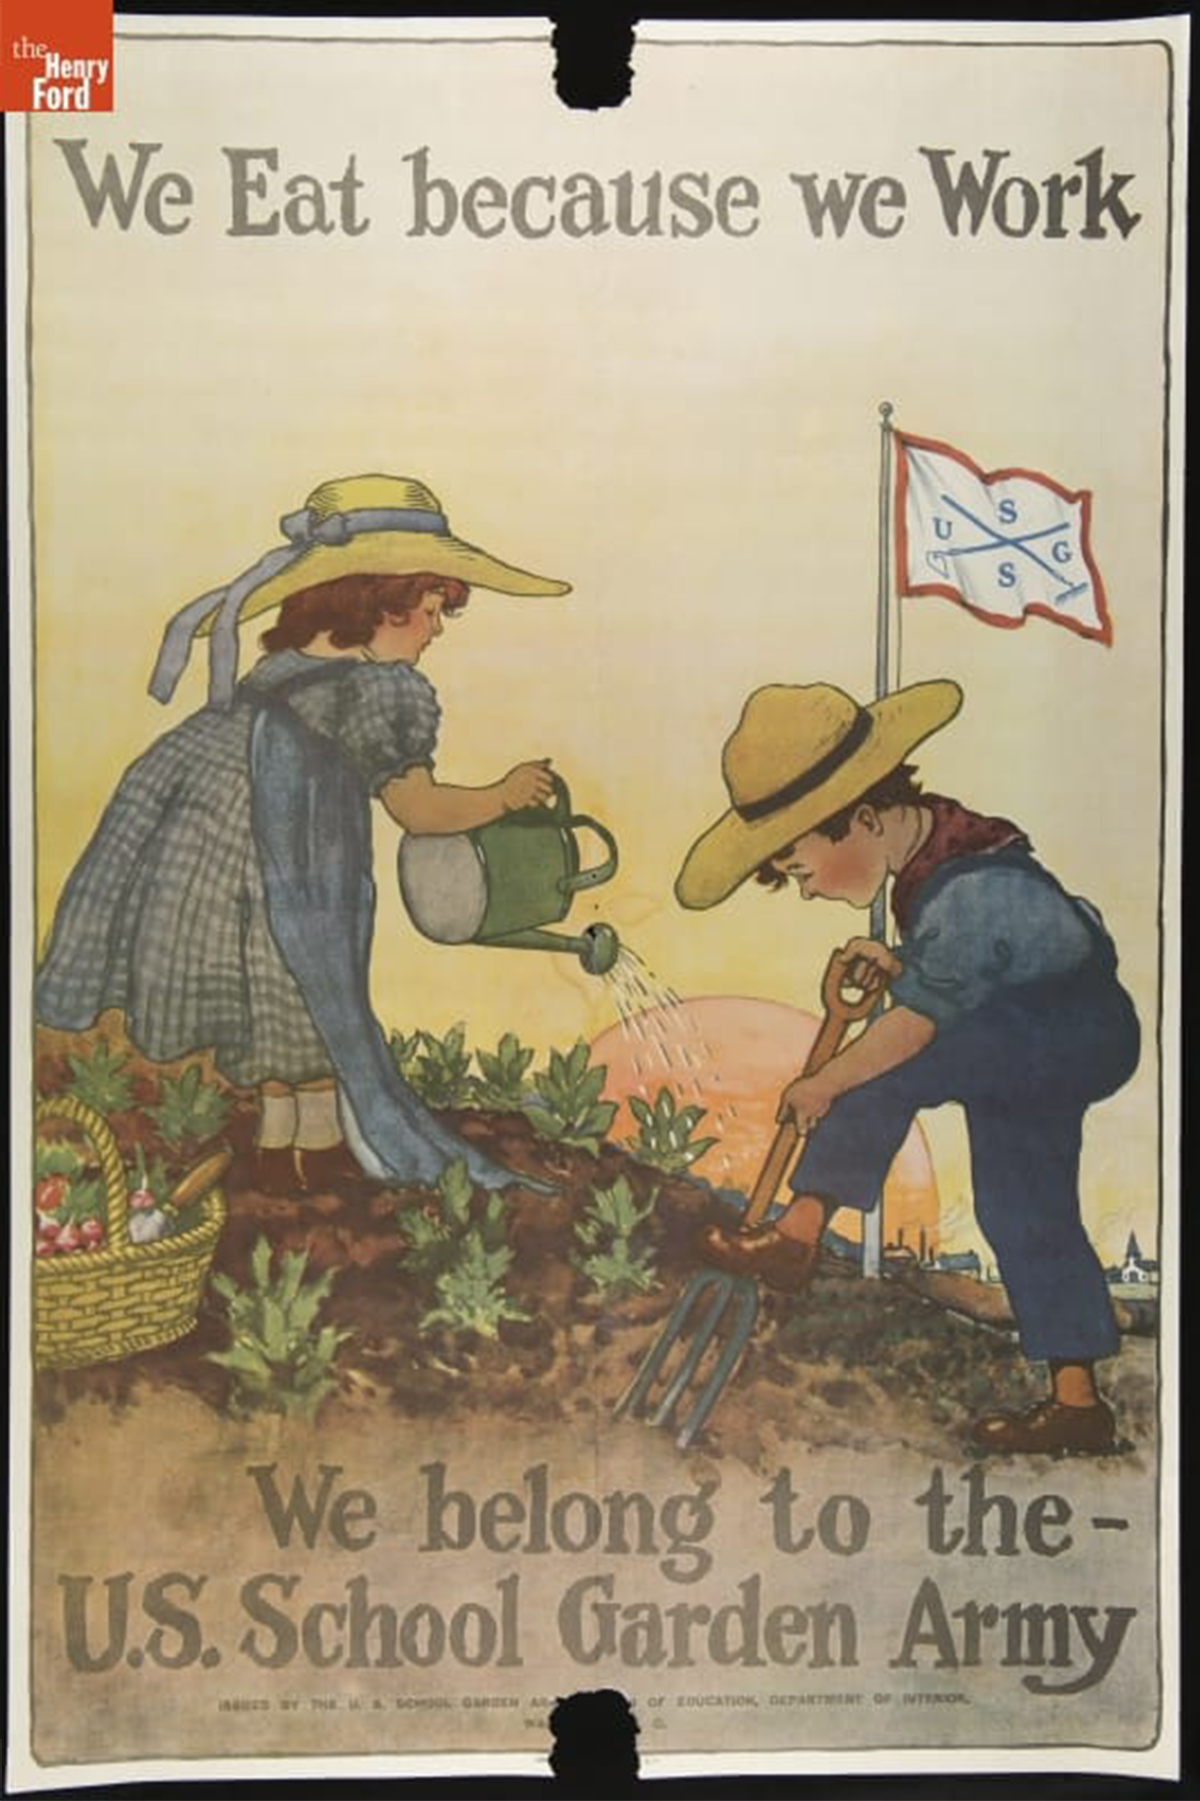 We Eat Because We Work poster, U.S. School Garden Army, 1917-1918